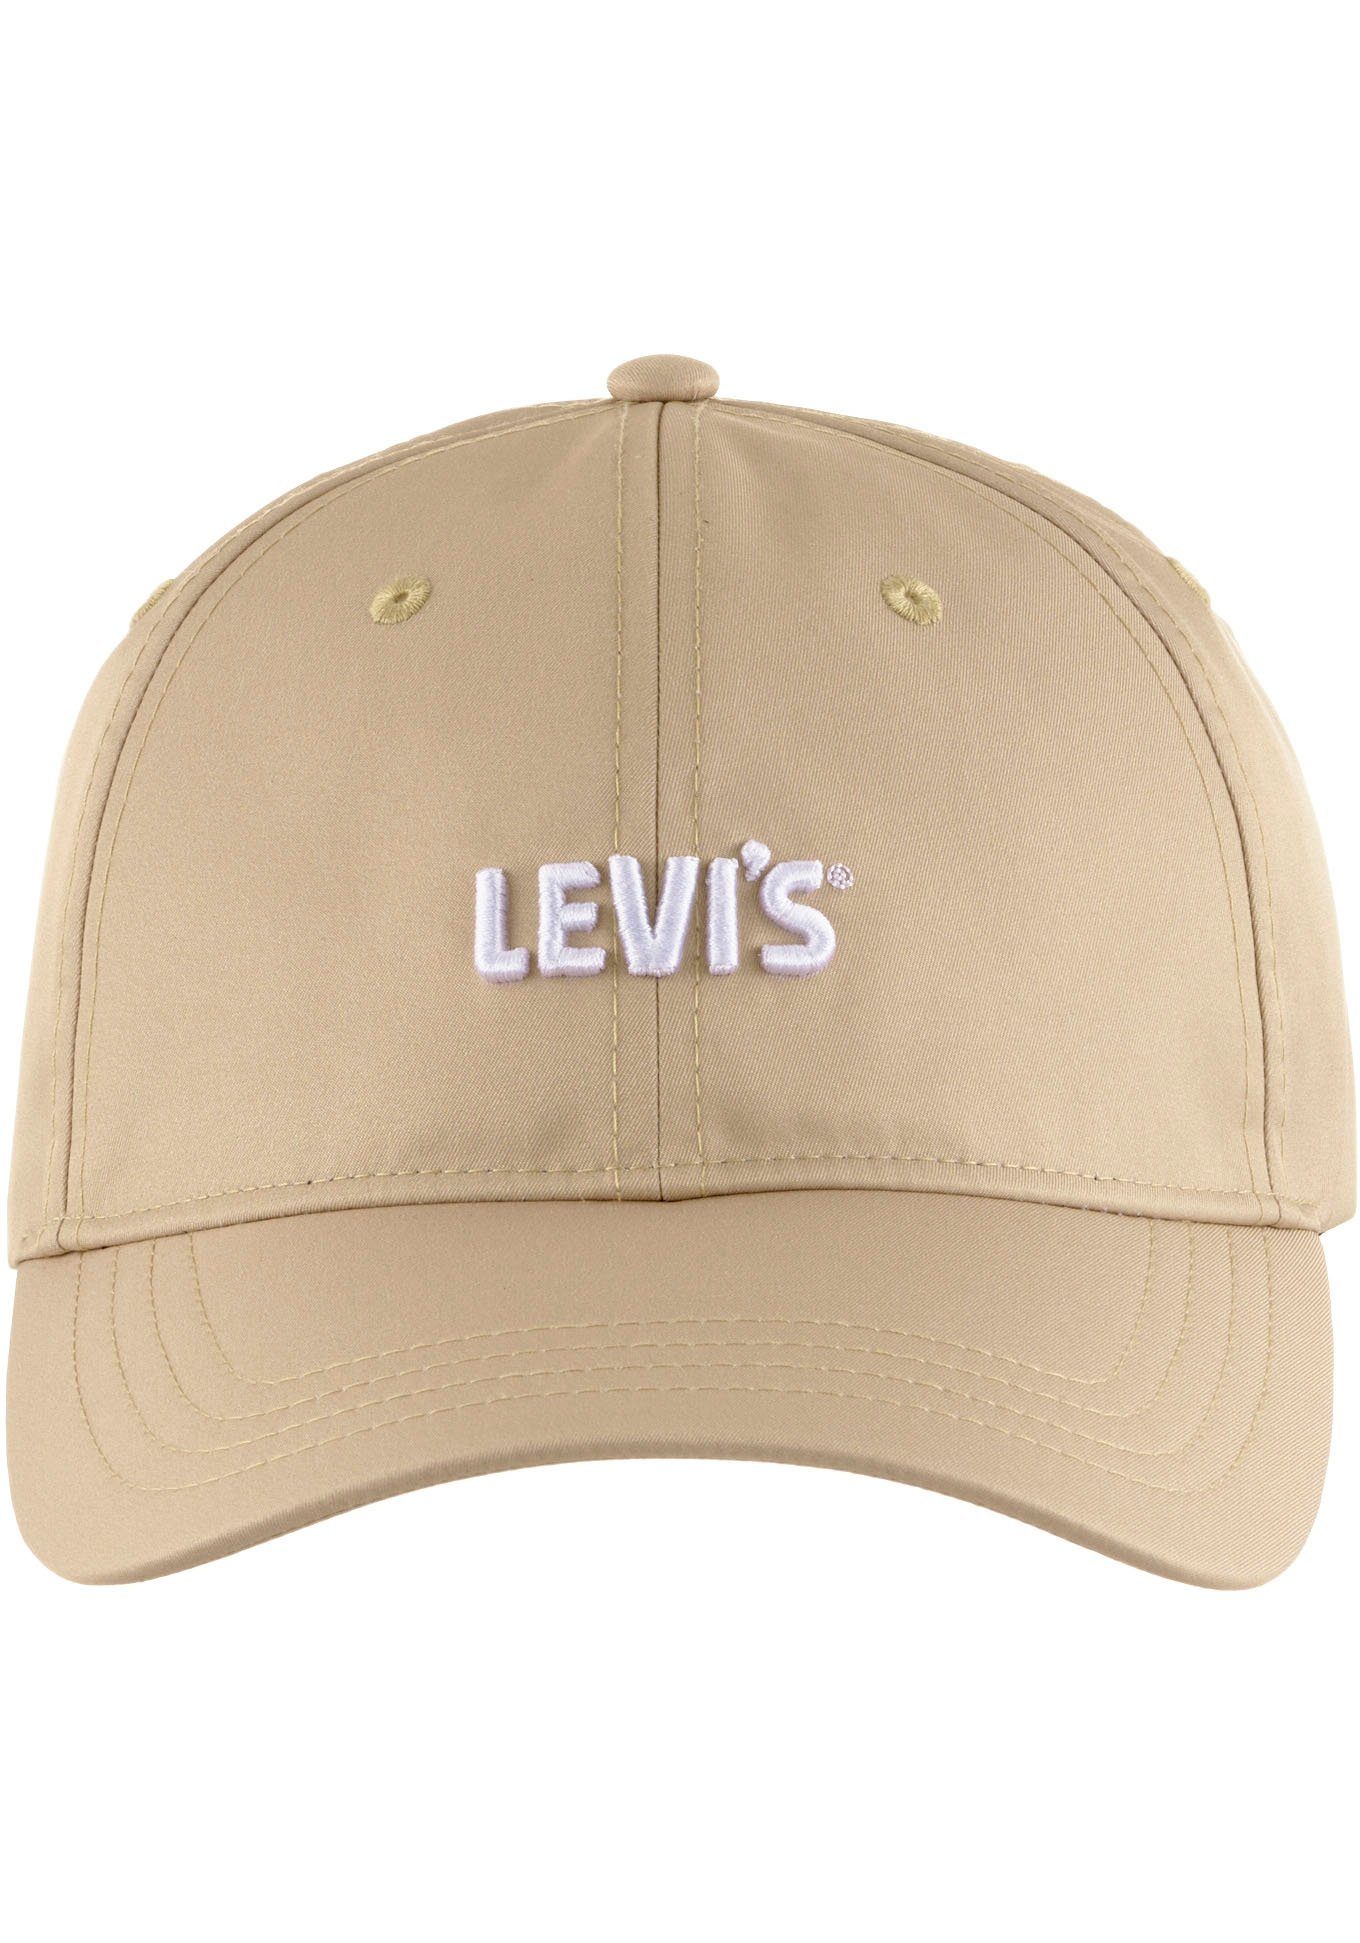 Levi's® Baseball Cap tan natural Gold Tab